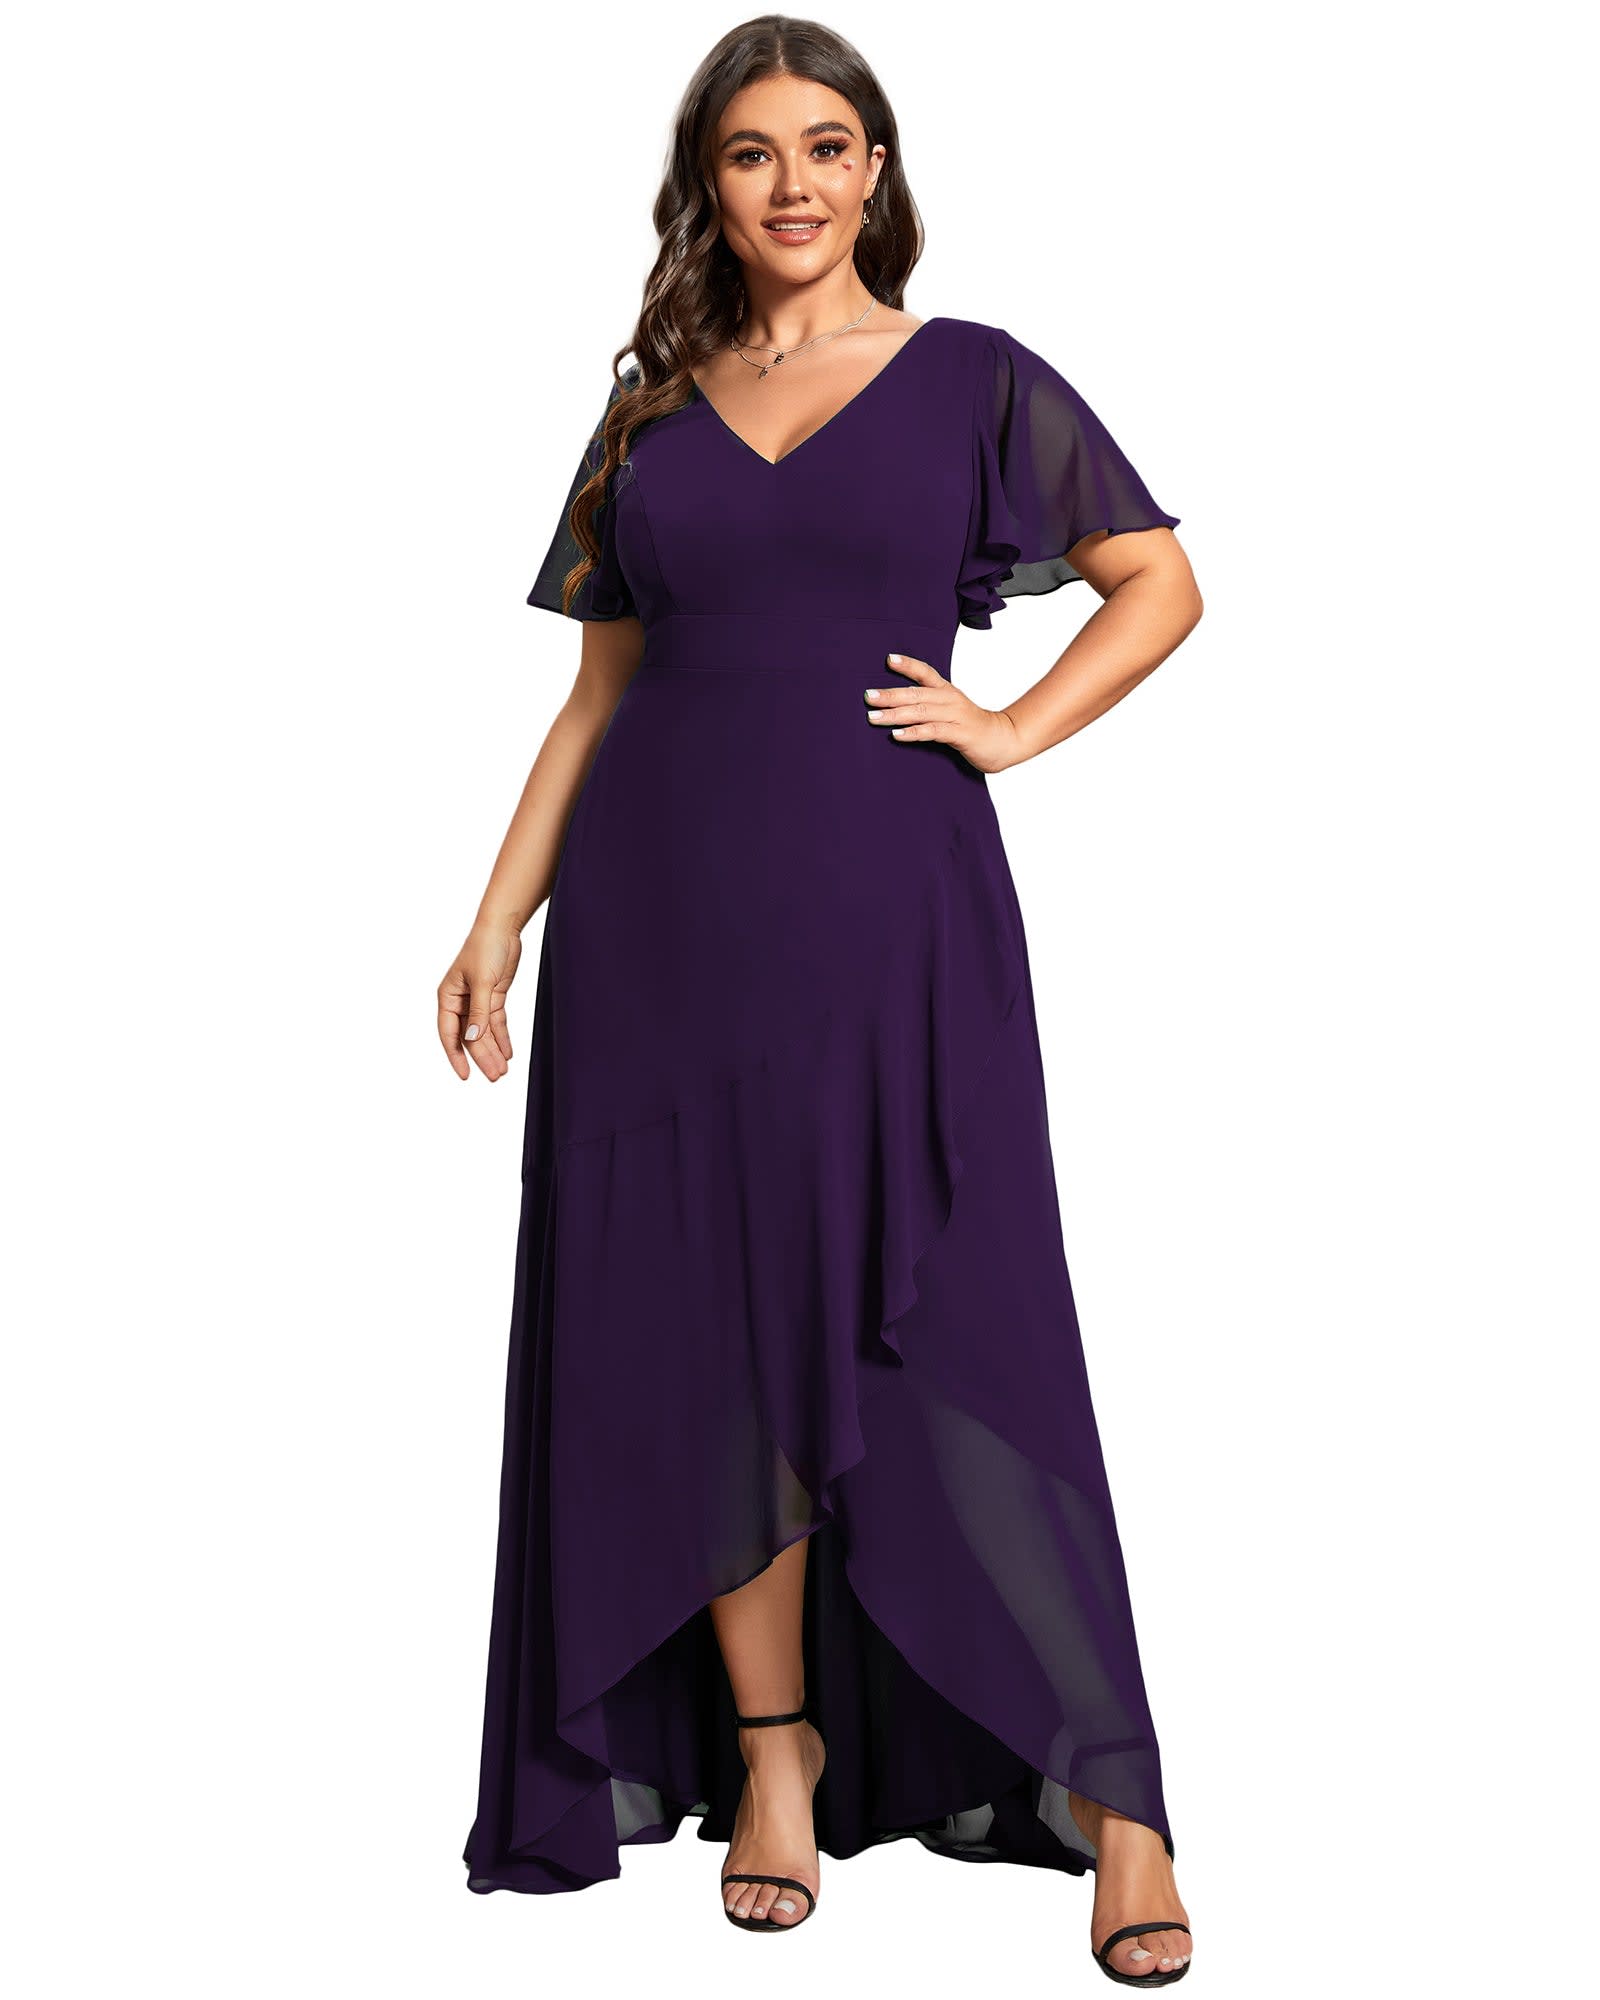 Charming Chiffon Bridesmaid Dress with Lotus Leaf Hemline | Dark Purple